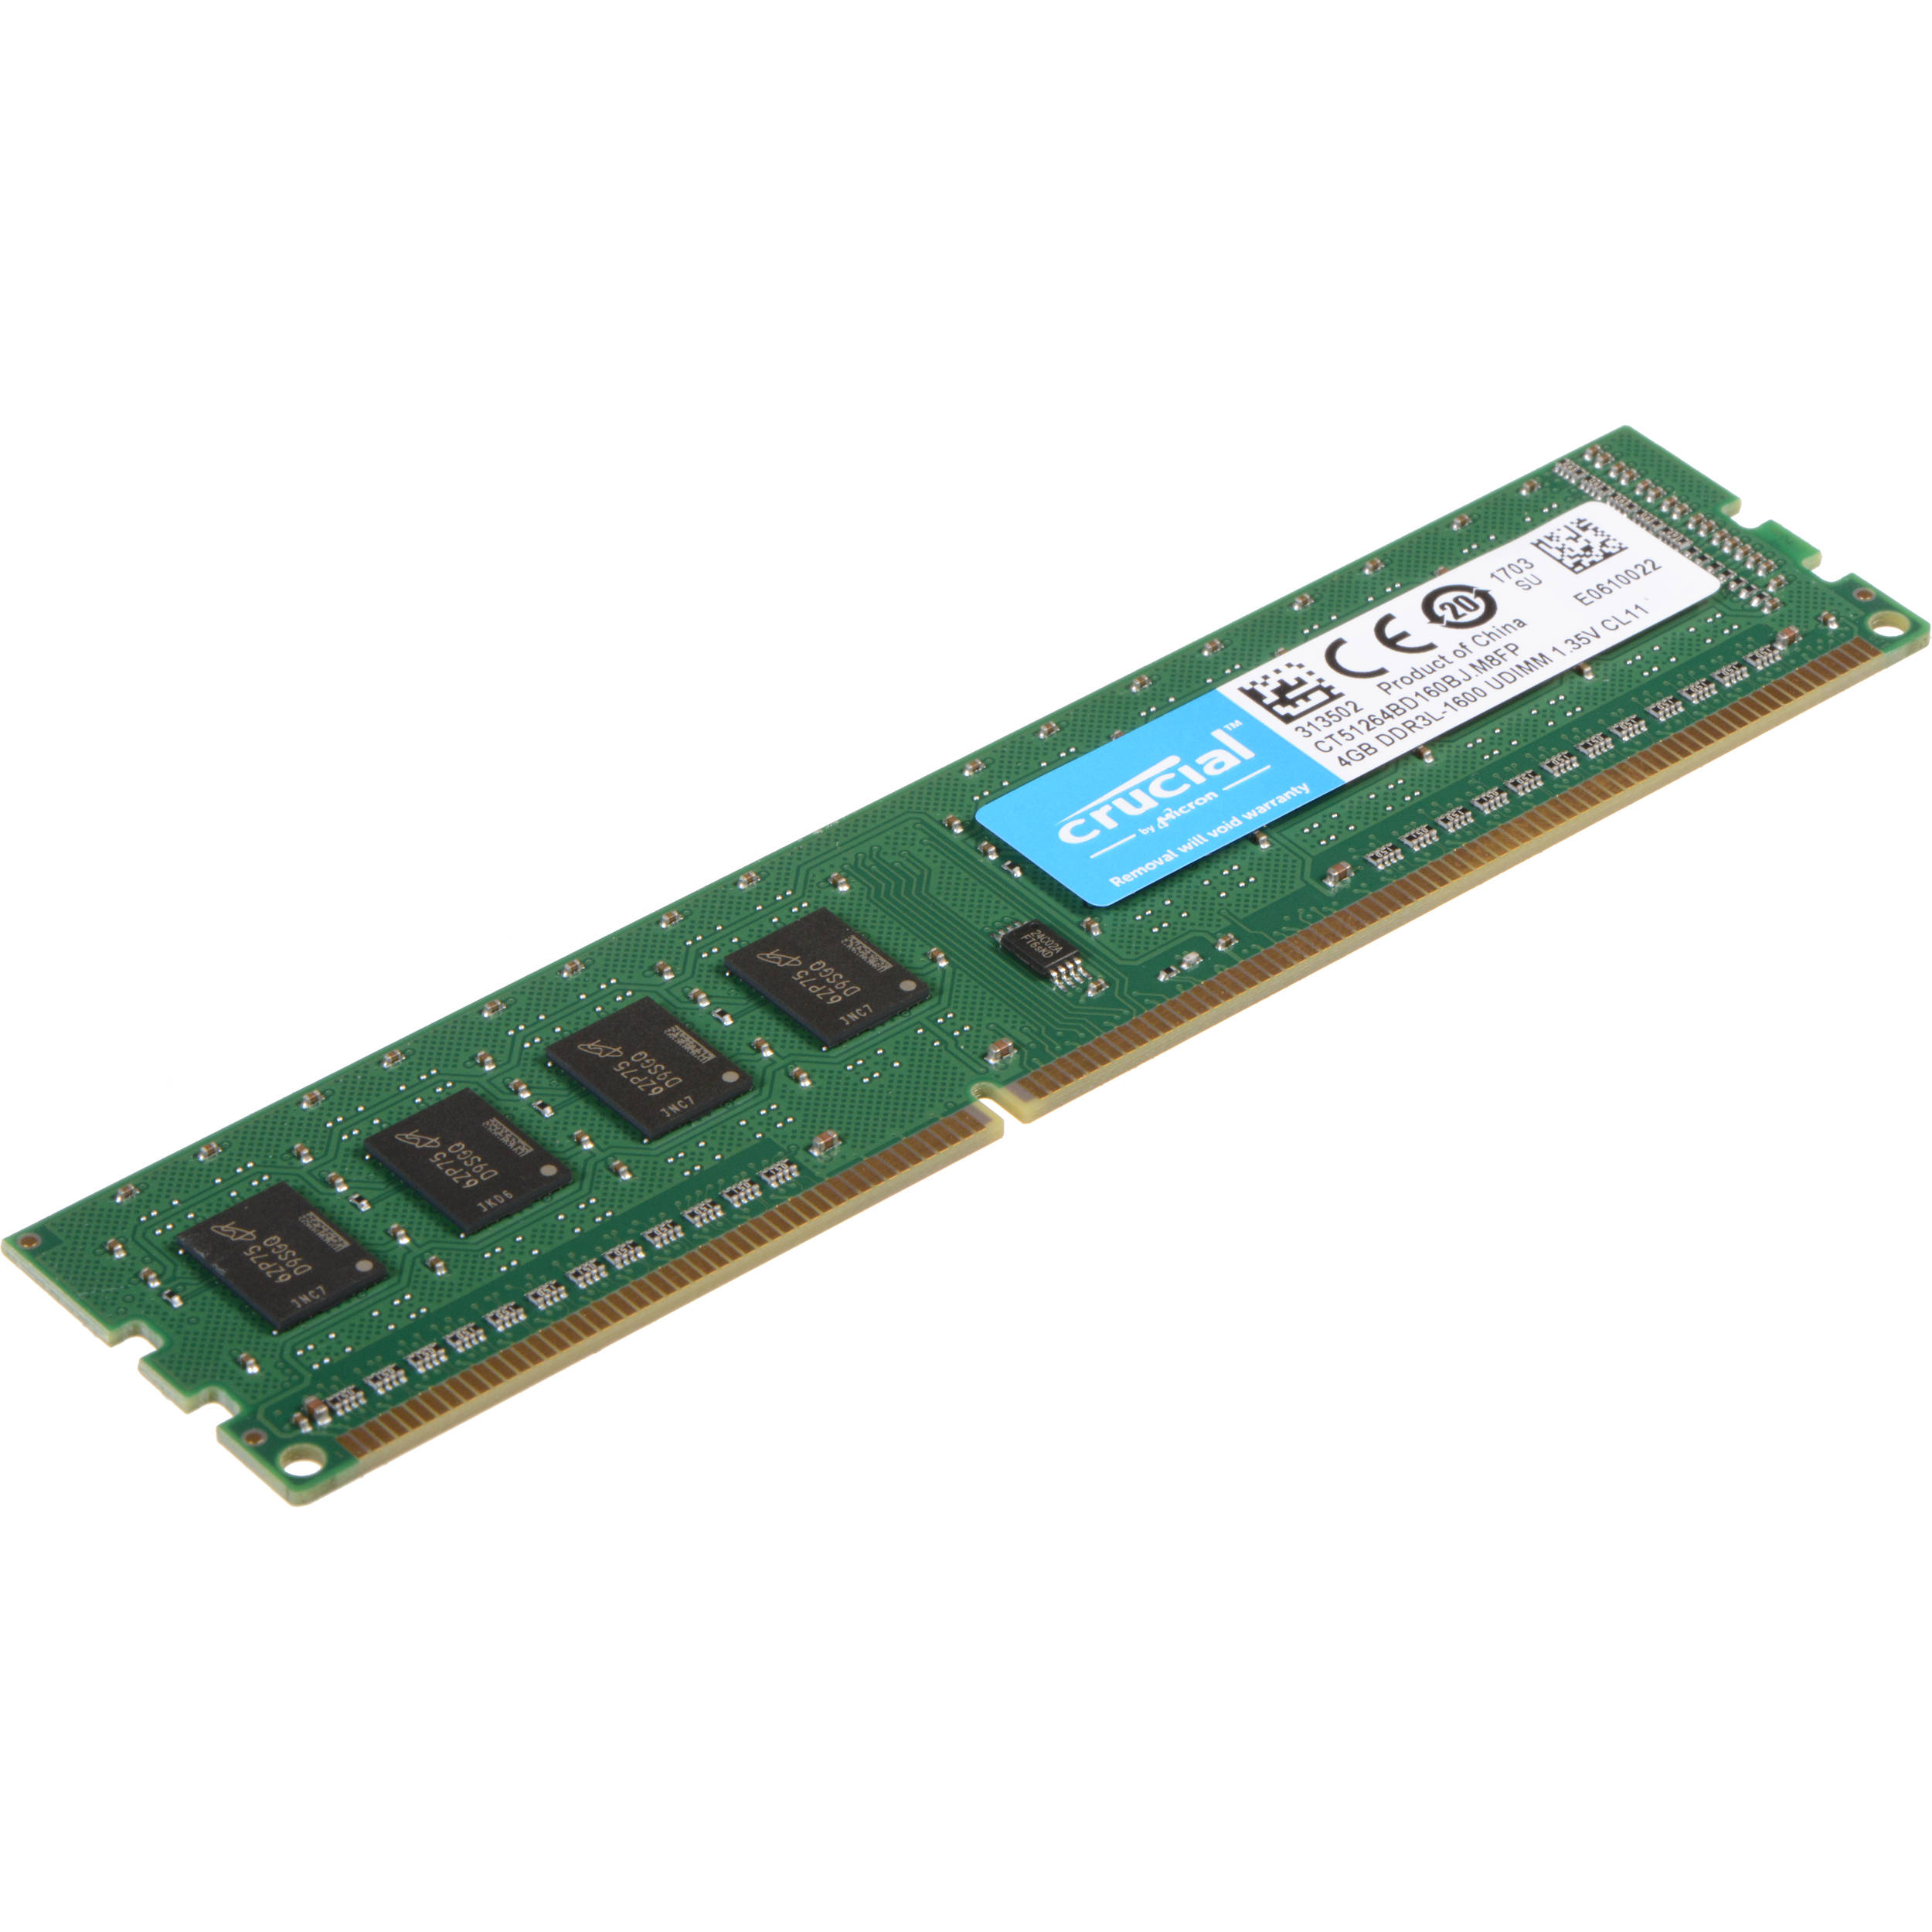 RAM DDR3 4GB PC1600 CRUCIAL MT/s (PC3L-12800) CL11 SR UNBUFFERED UDIMM 240pin FOR PC, Desktop RAM